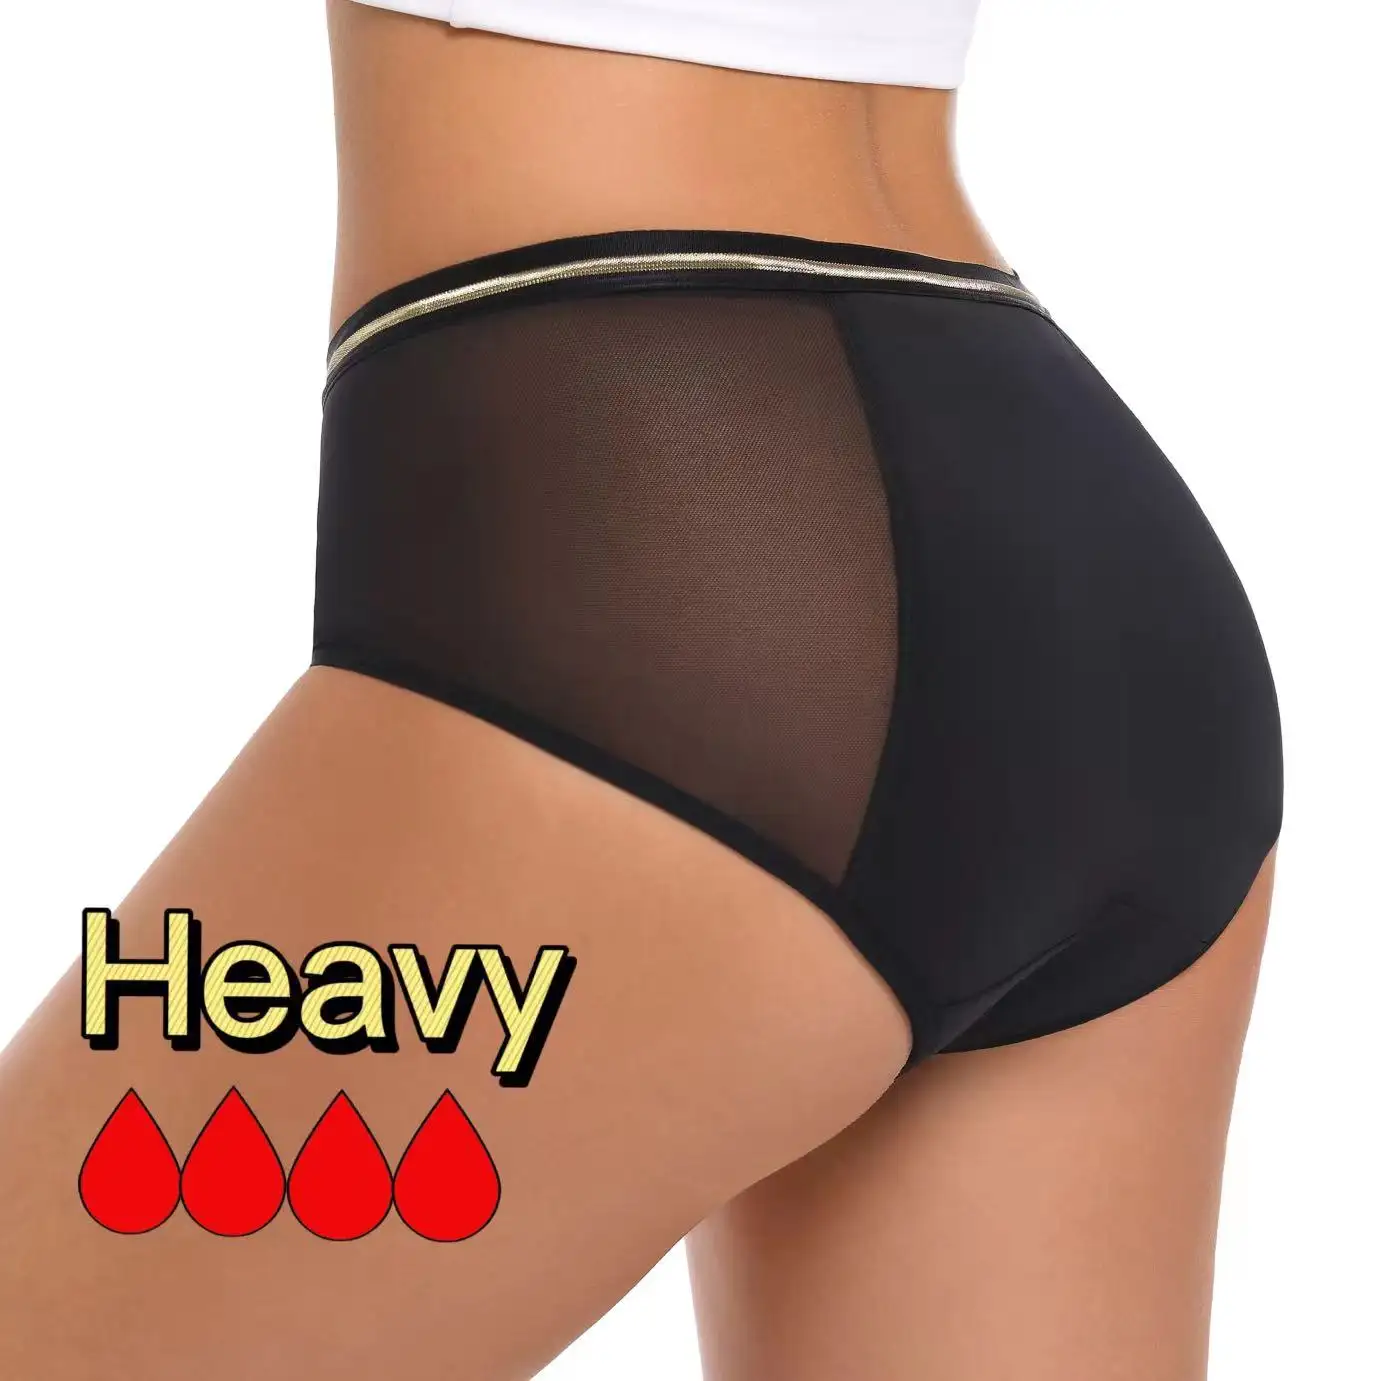 Custom Period Underwear Plus Size Teen High Waist Heavy Flow Absorption Leak Proof Organics Sustainable Menstrual Panties